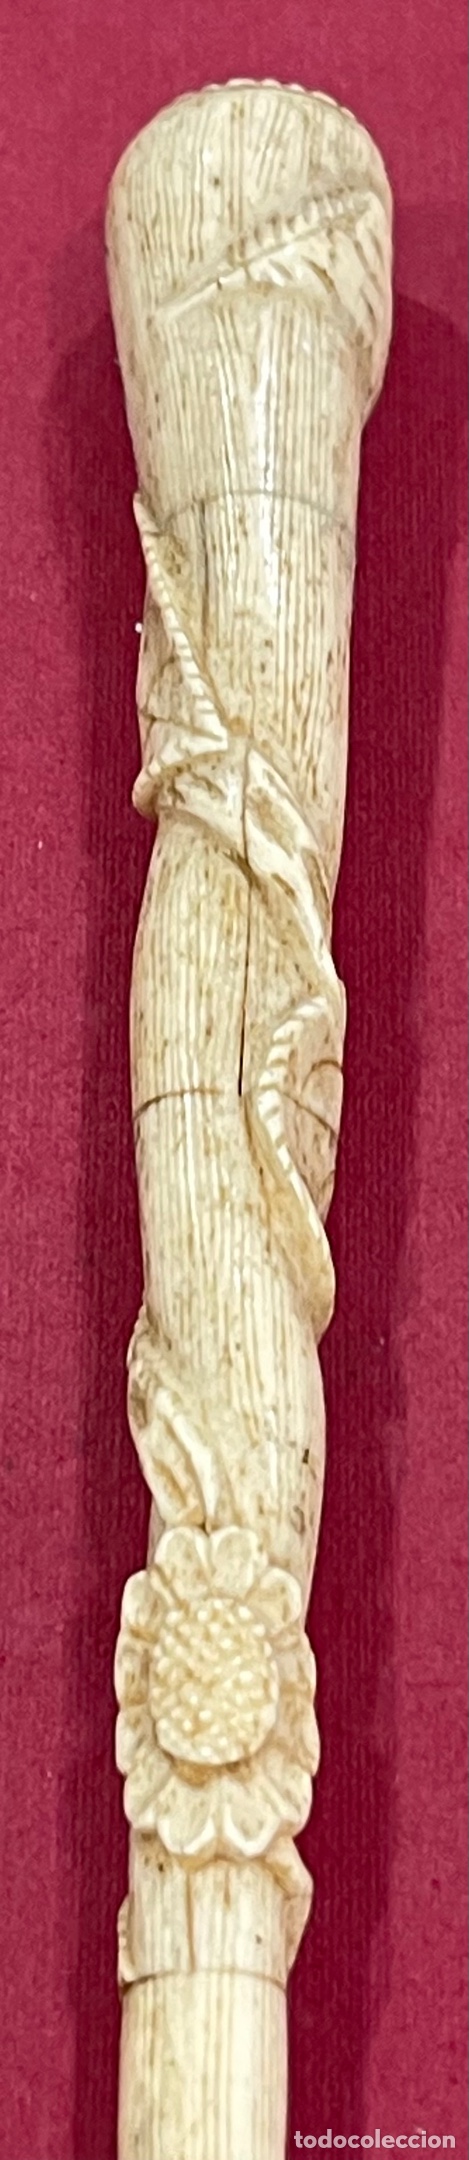 Antigüedades: Antiguo mango para bastón de paseo, en hueso tallado. - Foto 4 - 271583598